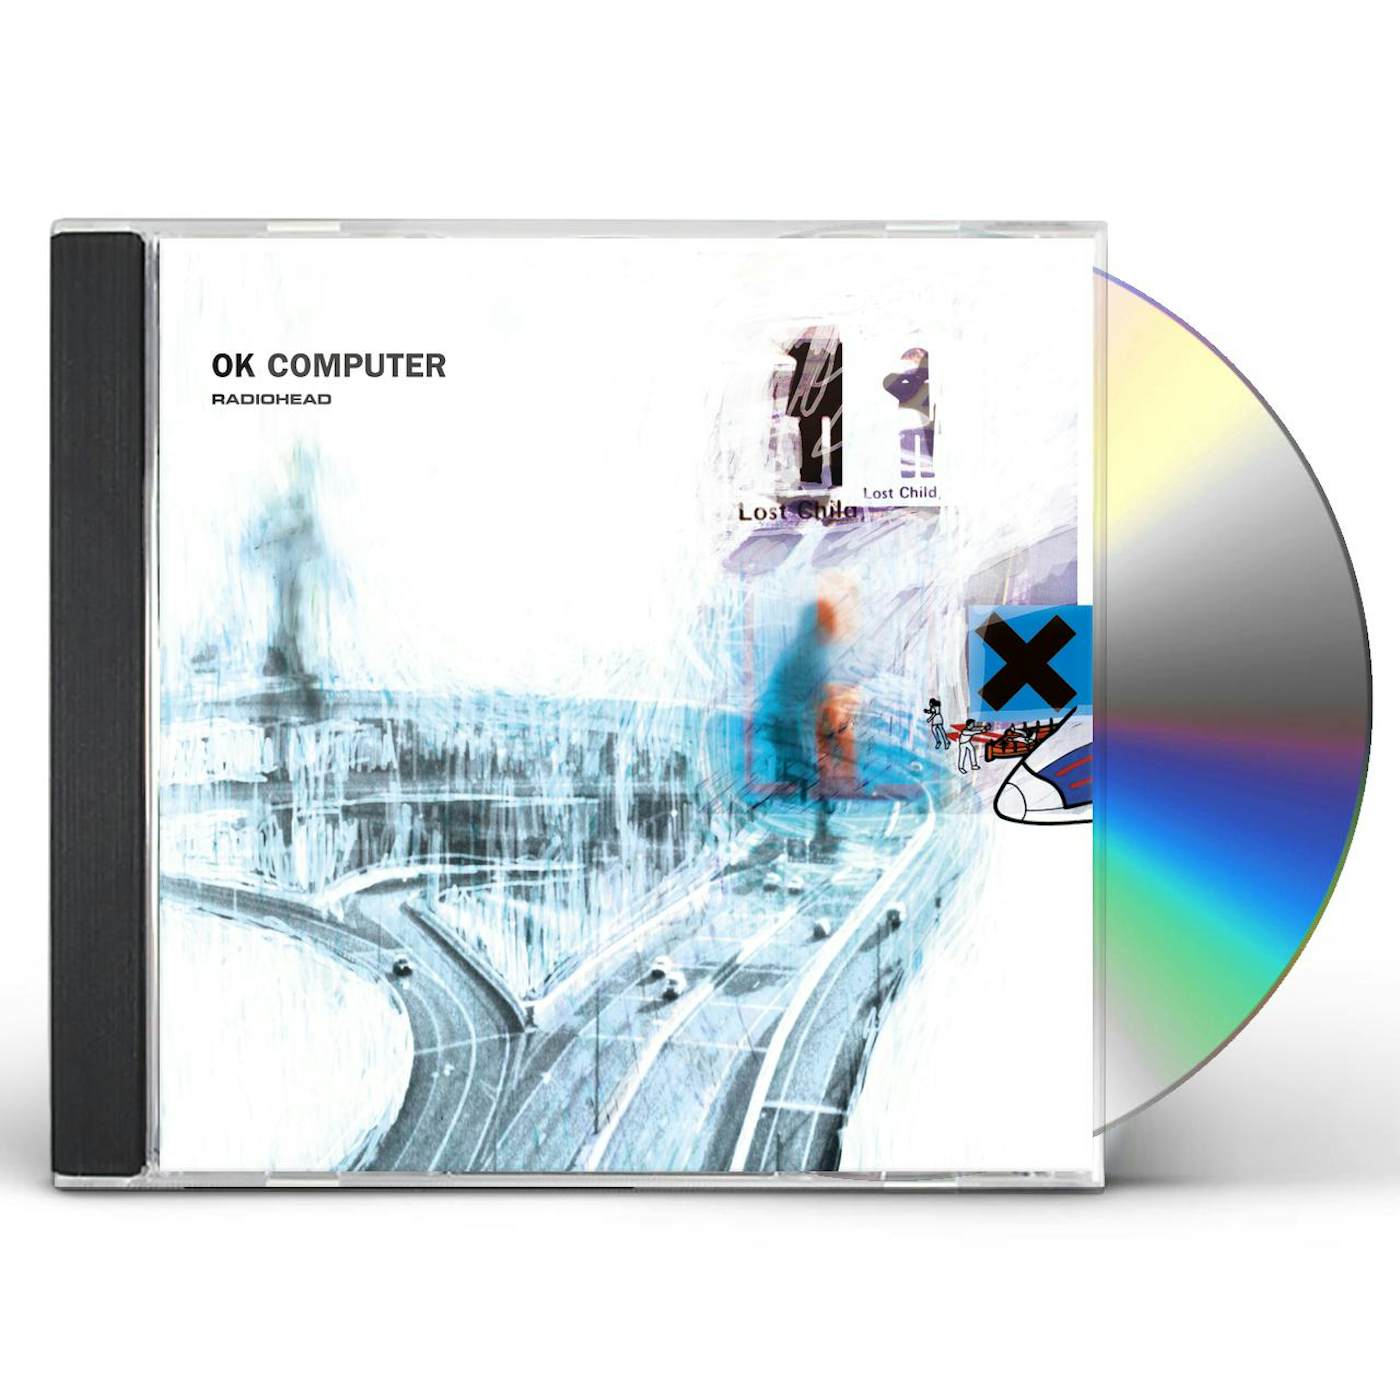 Radiohead OK COMPUTER CD